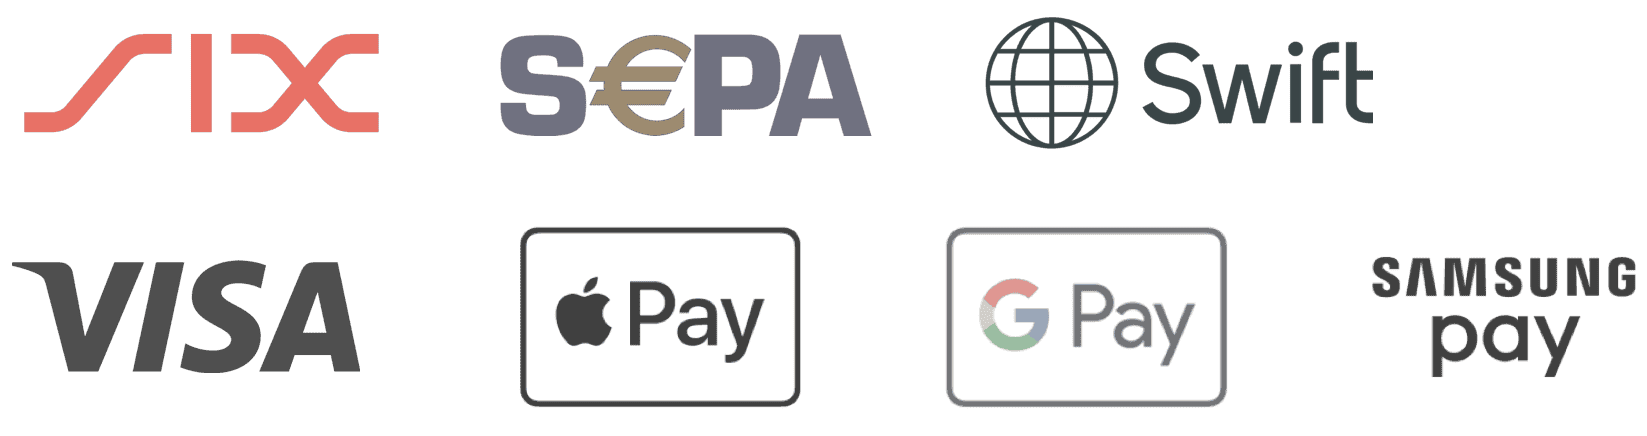 SIX, SEPA, SWIFT, Visa, Apple Pay, Google Pay, Samsung Pay logos